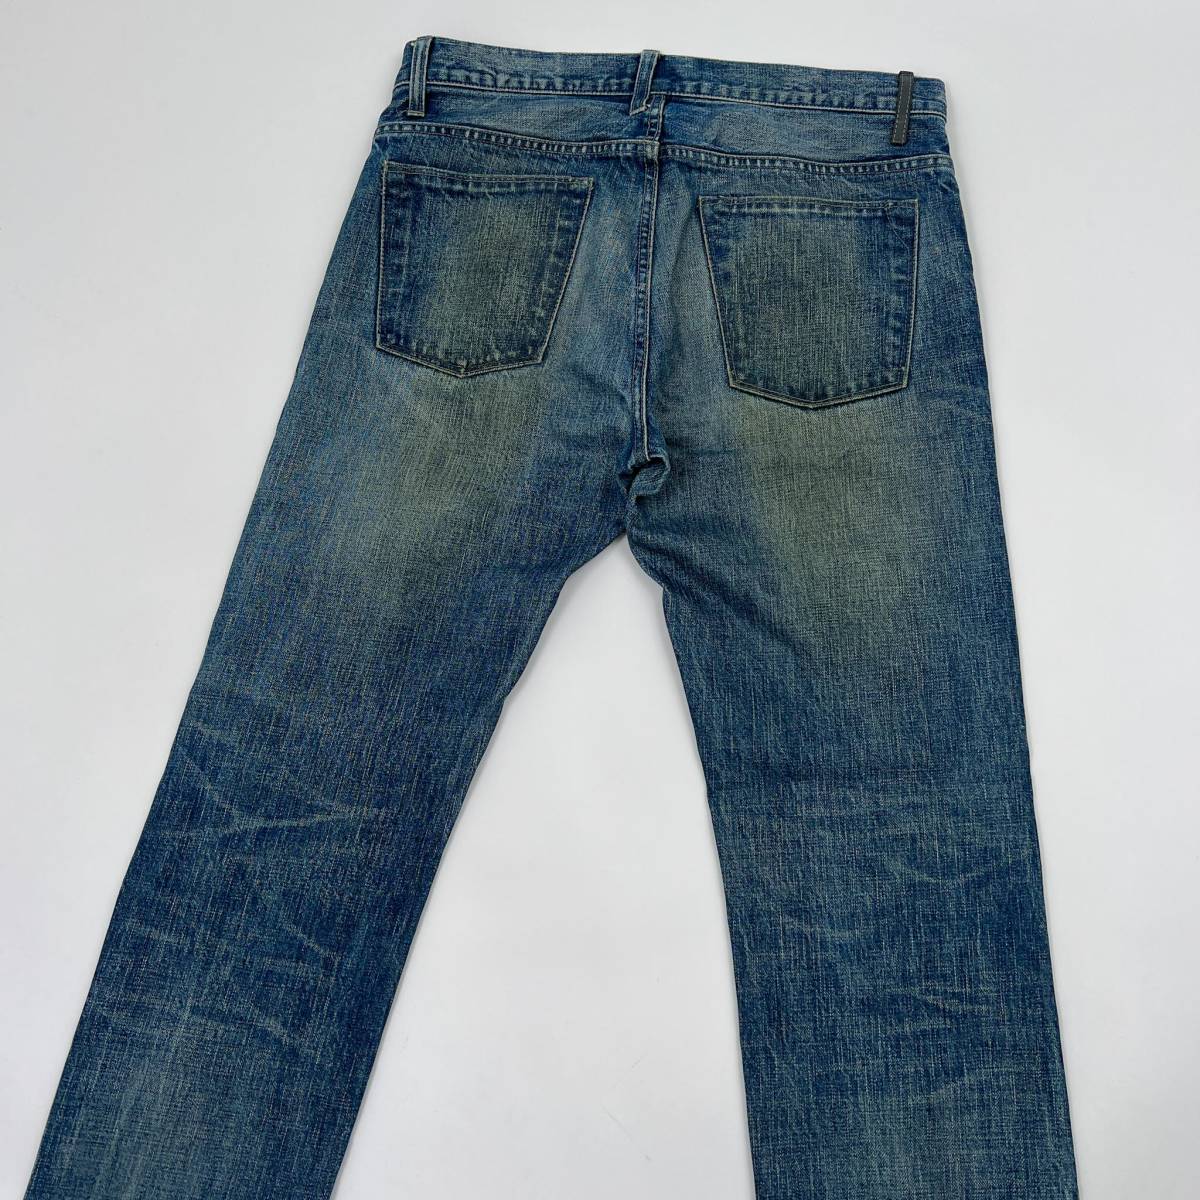 USA made *HELMUT LANG Helmut Lang damage processing red ear cell bichi Denim pants jeans 31 / men's / America made / Vintage 